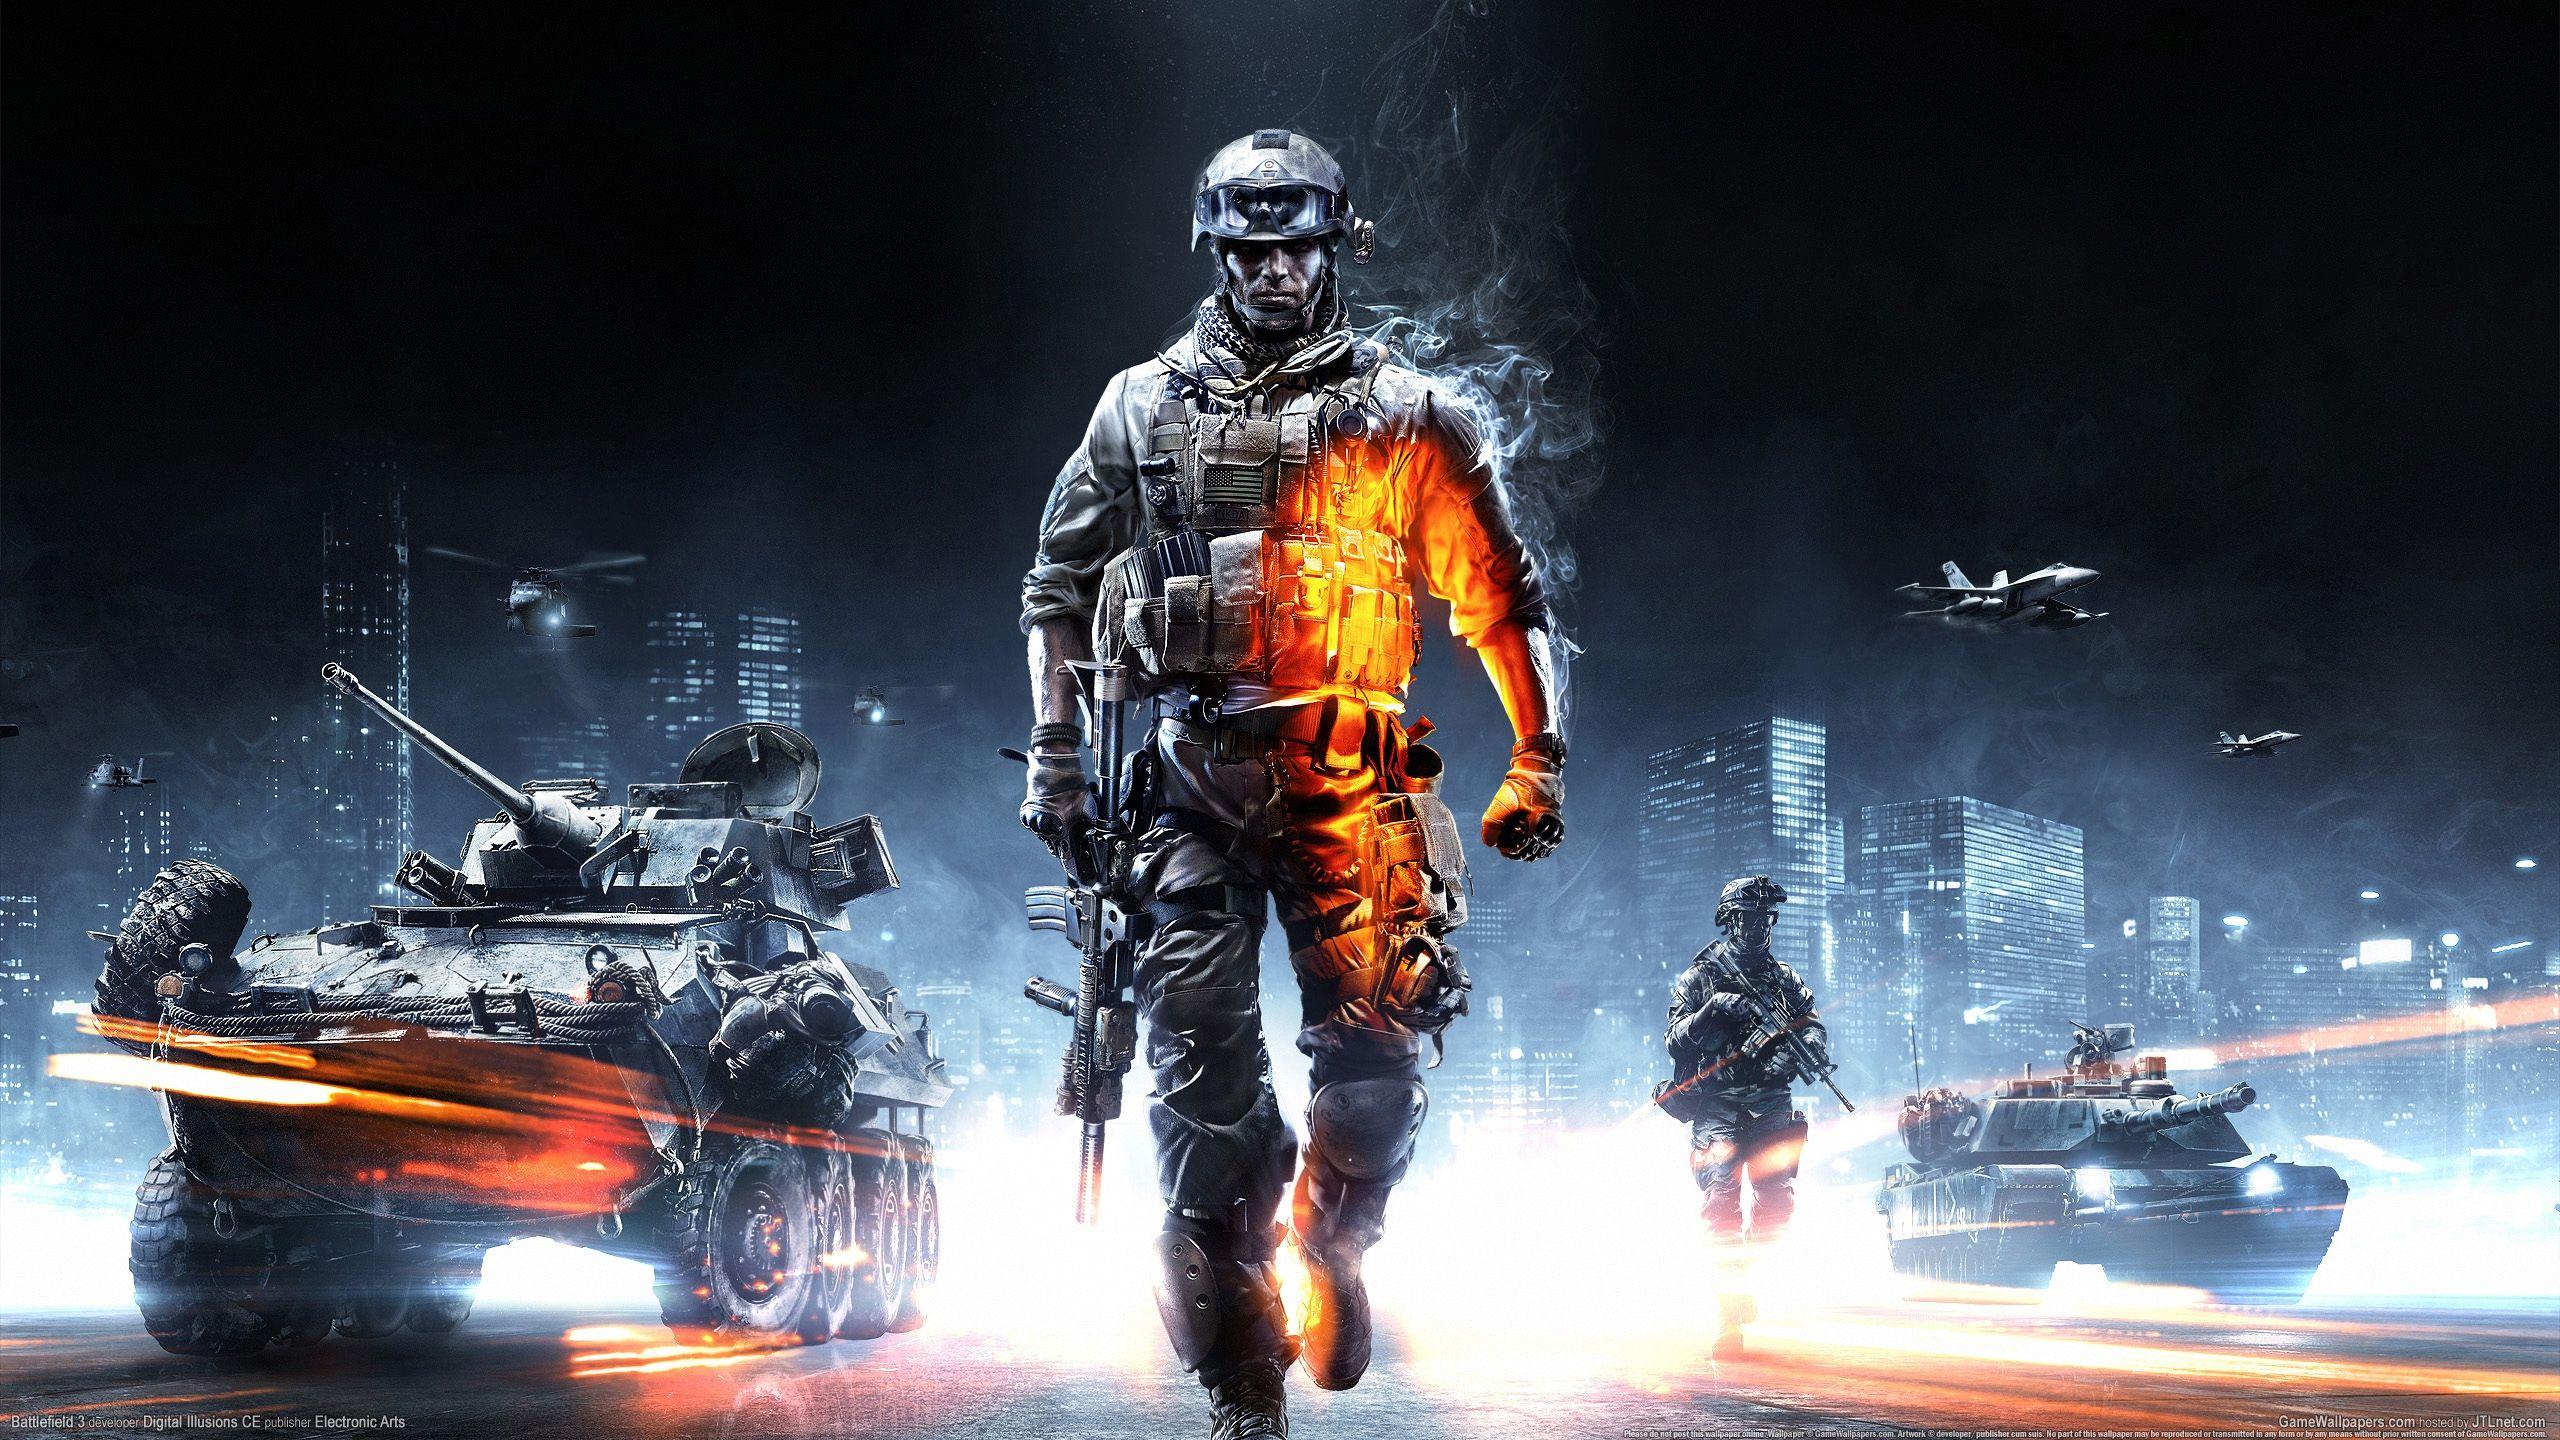 Battlefield 3 Wallpaper, Picture, Image